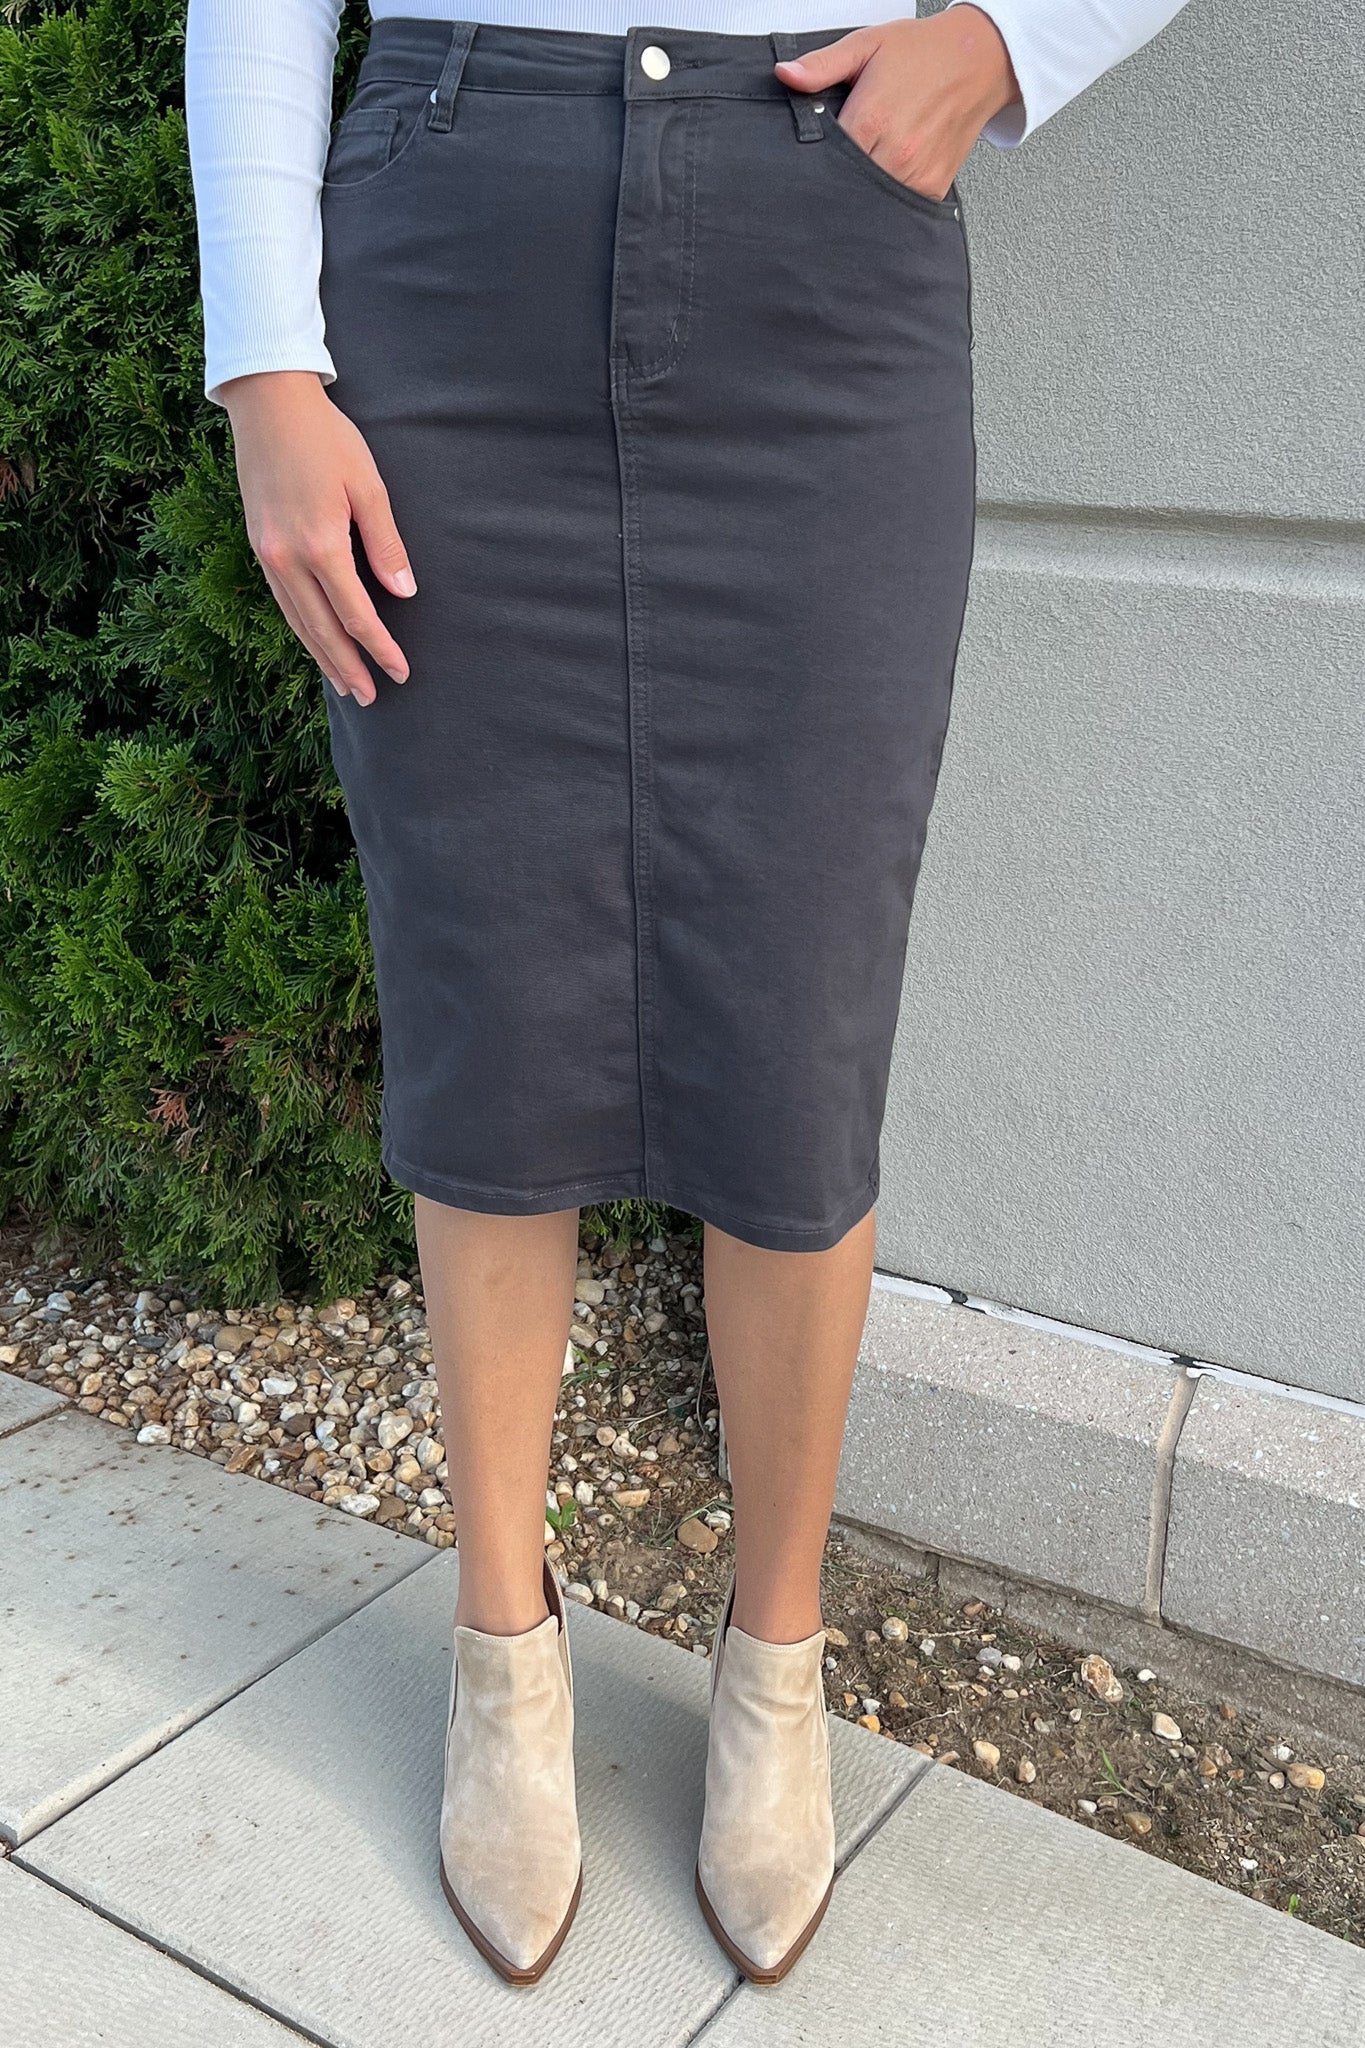 JDA Charcoal Gray Denim Skirt (FINAL SALE)